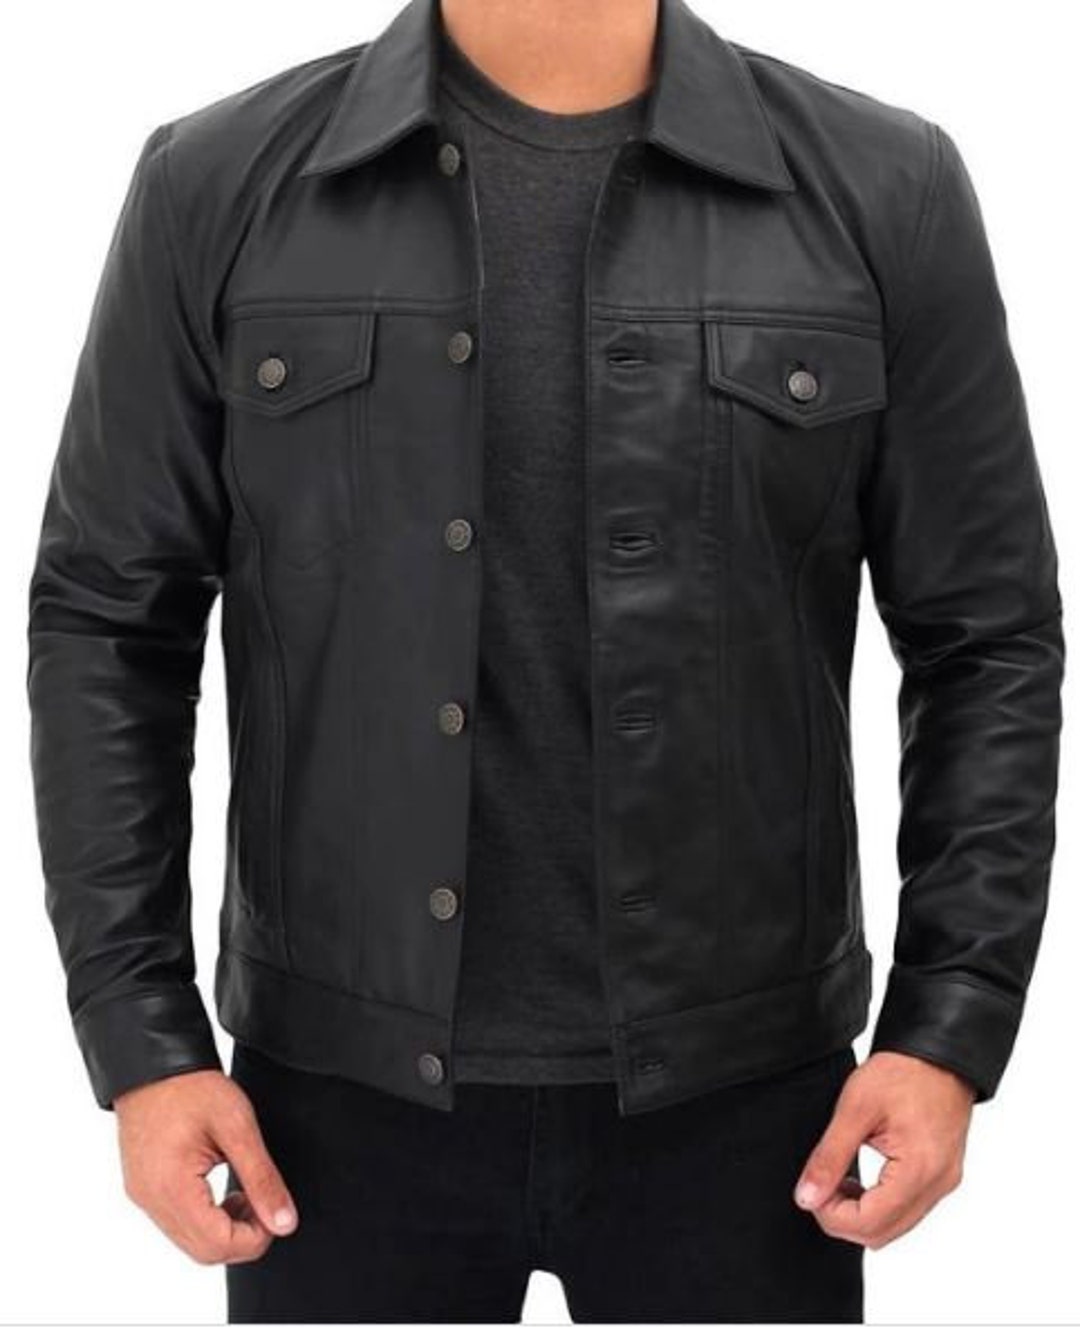 Men's Black Trucker Shirt Style Lambskin Leather Jacket - Etsy